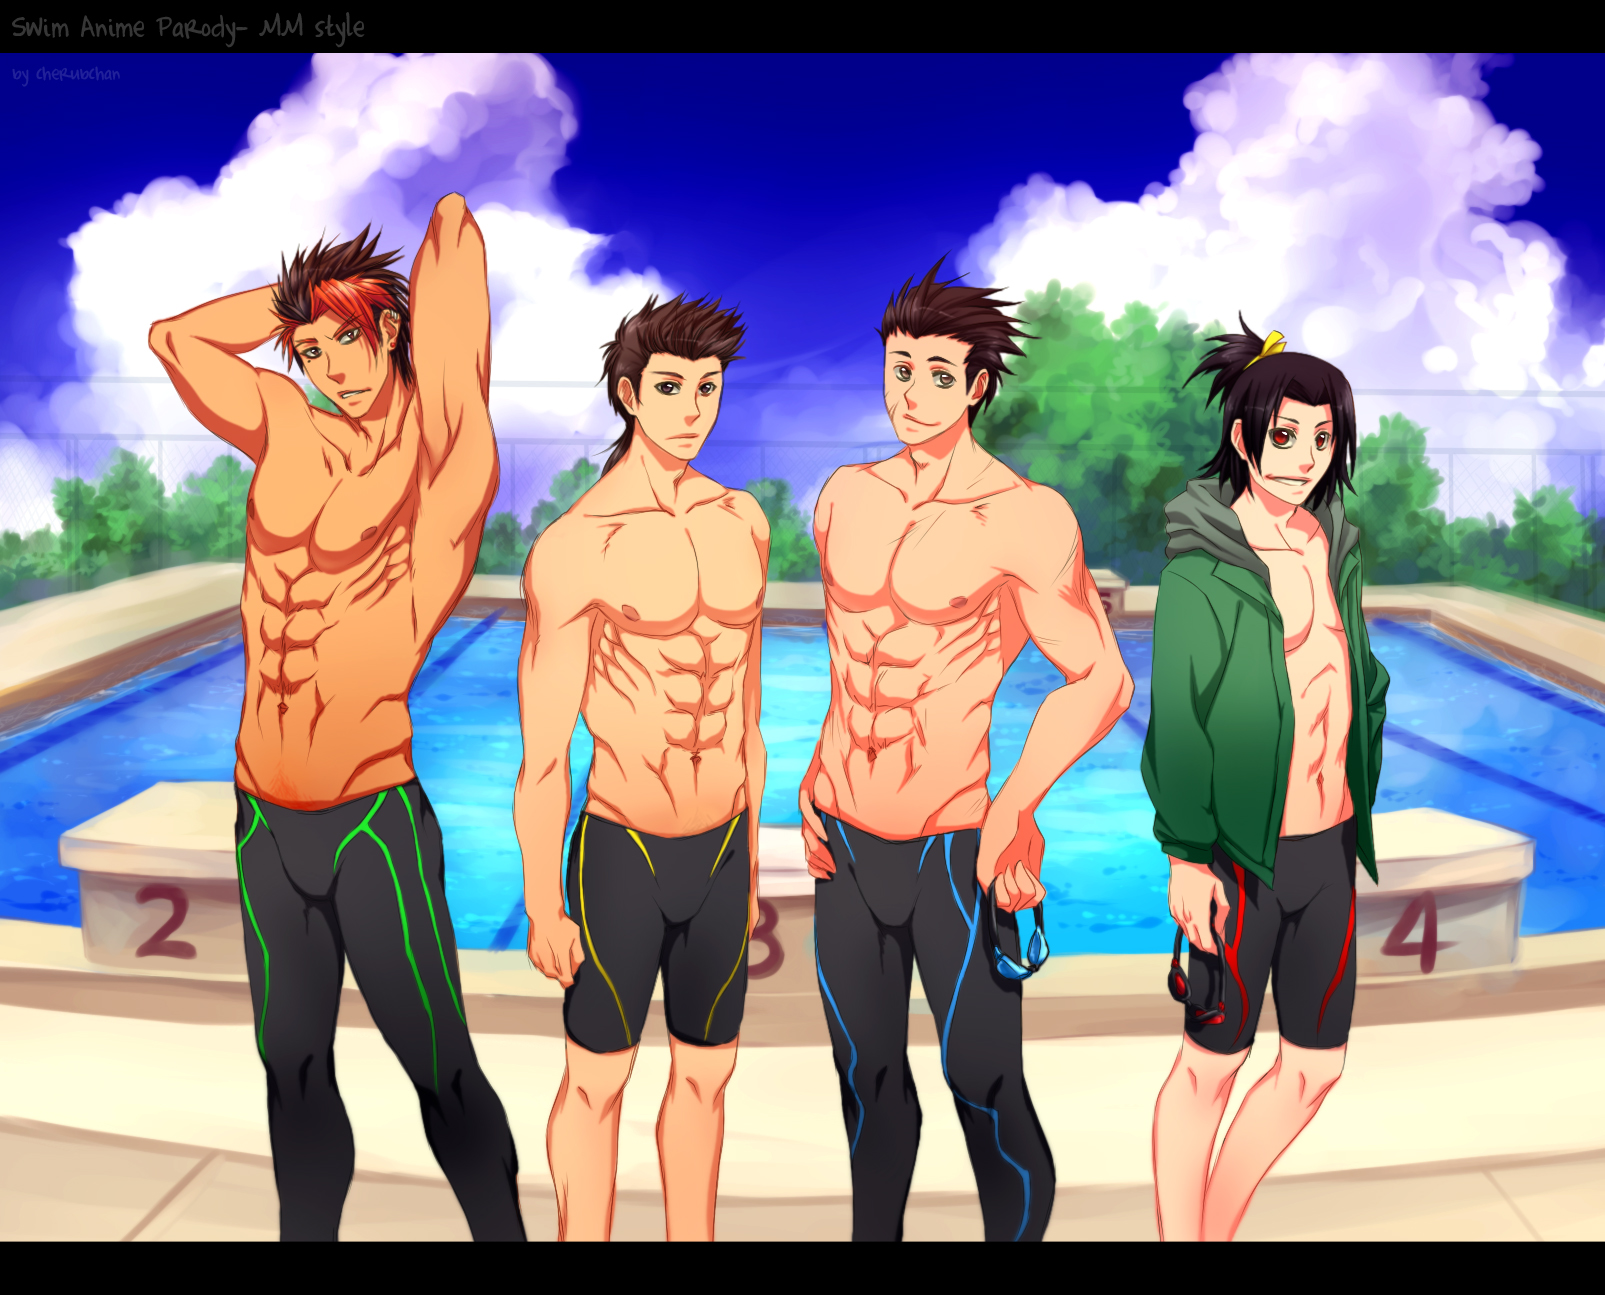 MM: Swim Anime x FC Boys by cherubchan on DeviantArt.